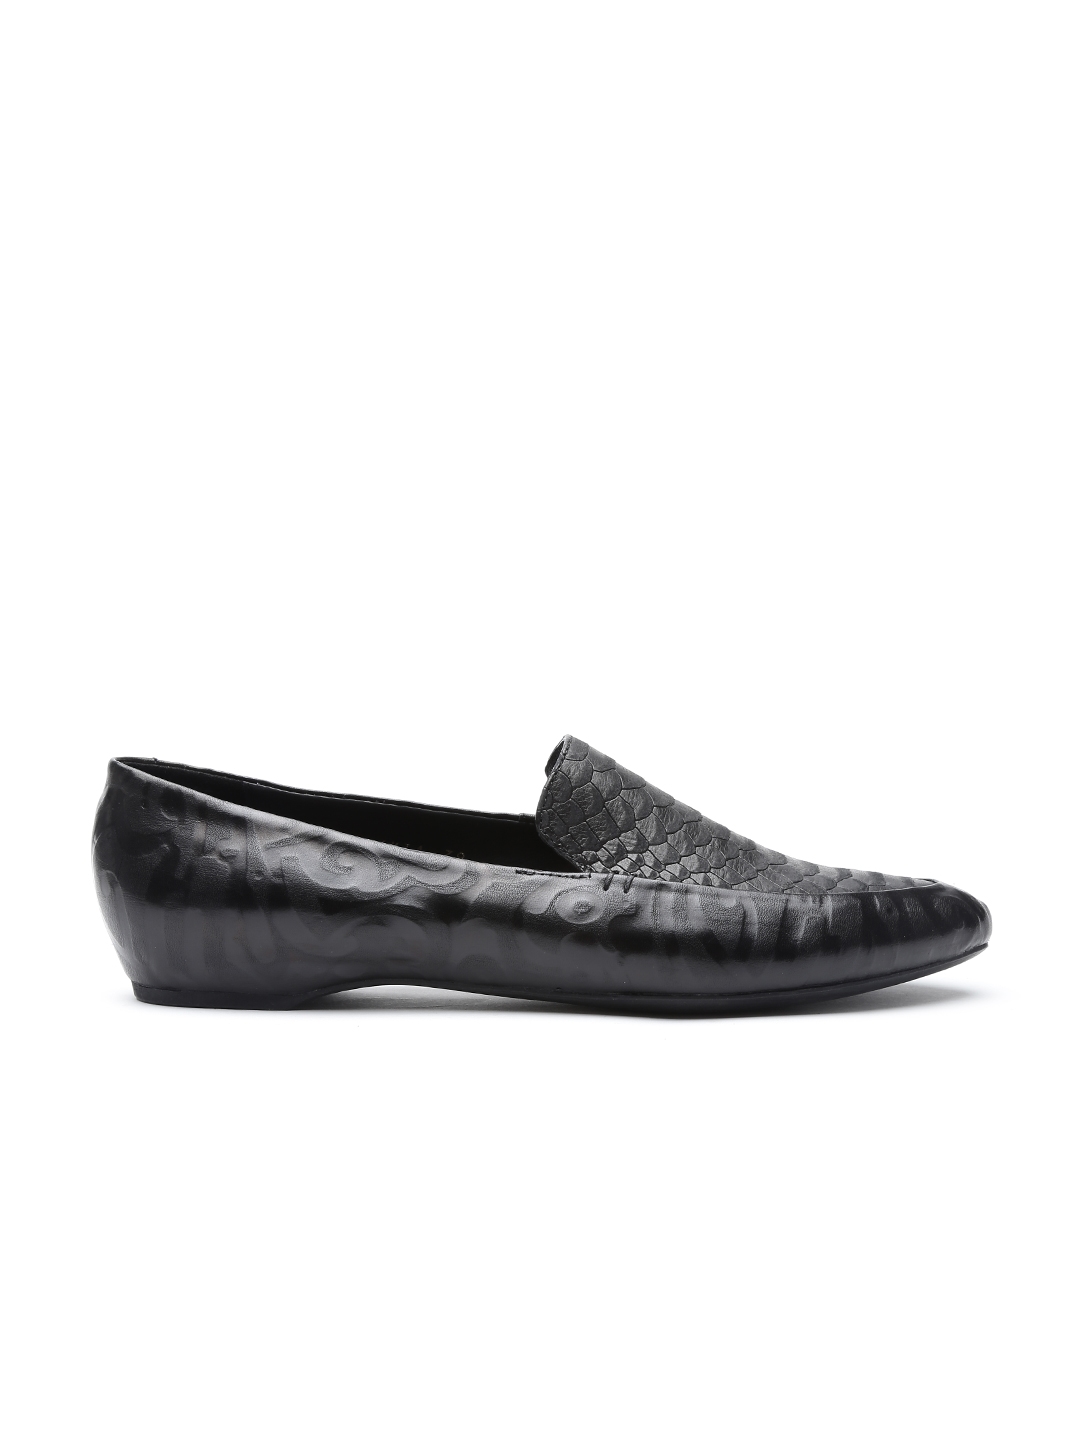 Geox Respira Comfort Shoe Italian Patent Leather  Black patent leather  loafers Patent loafers Geox shoes